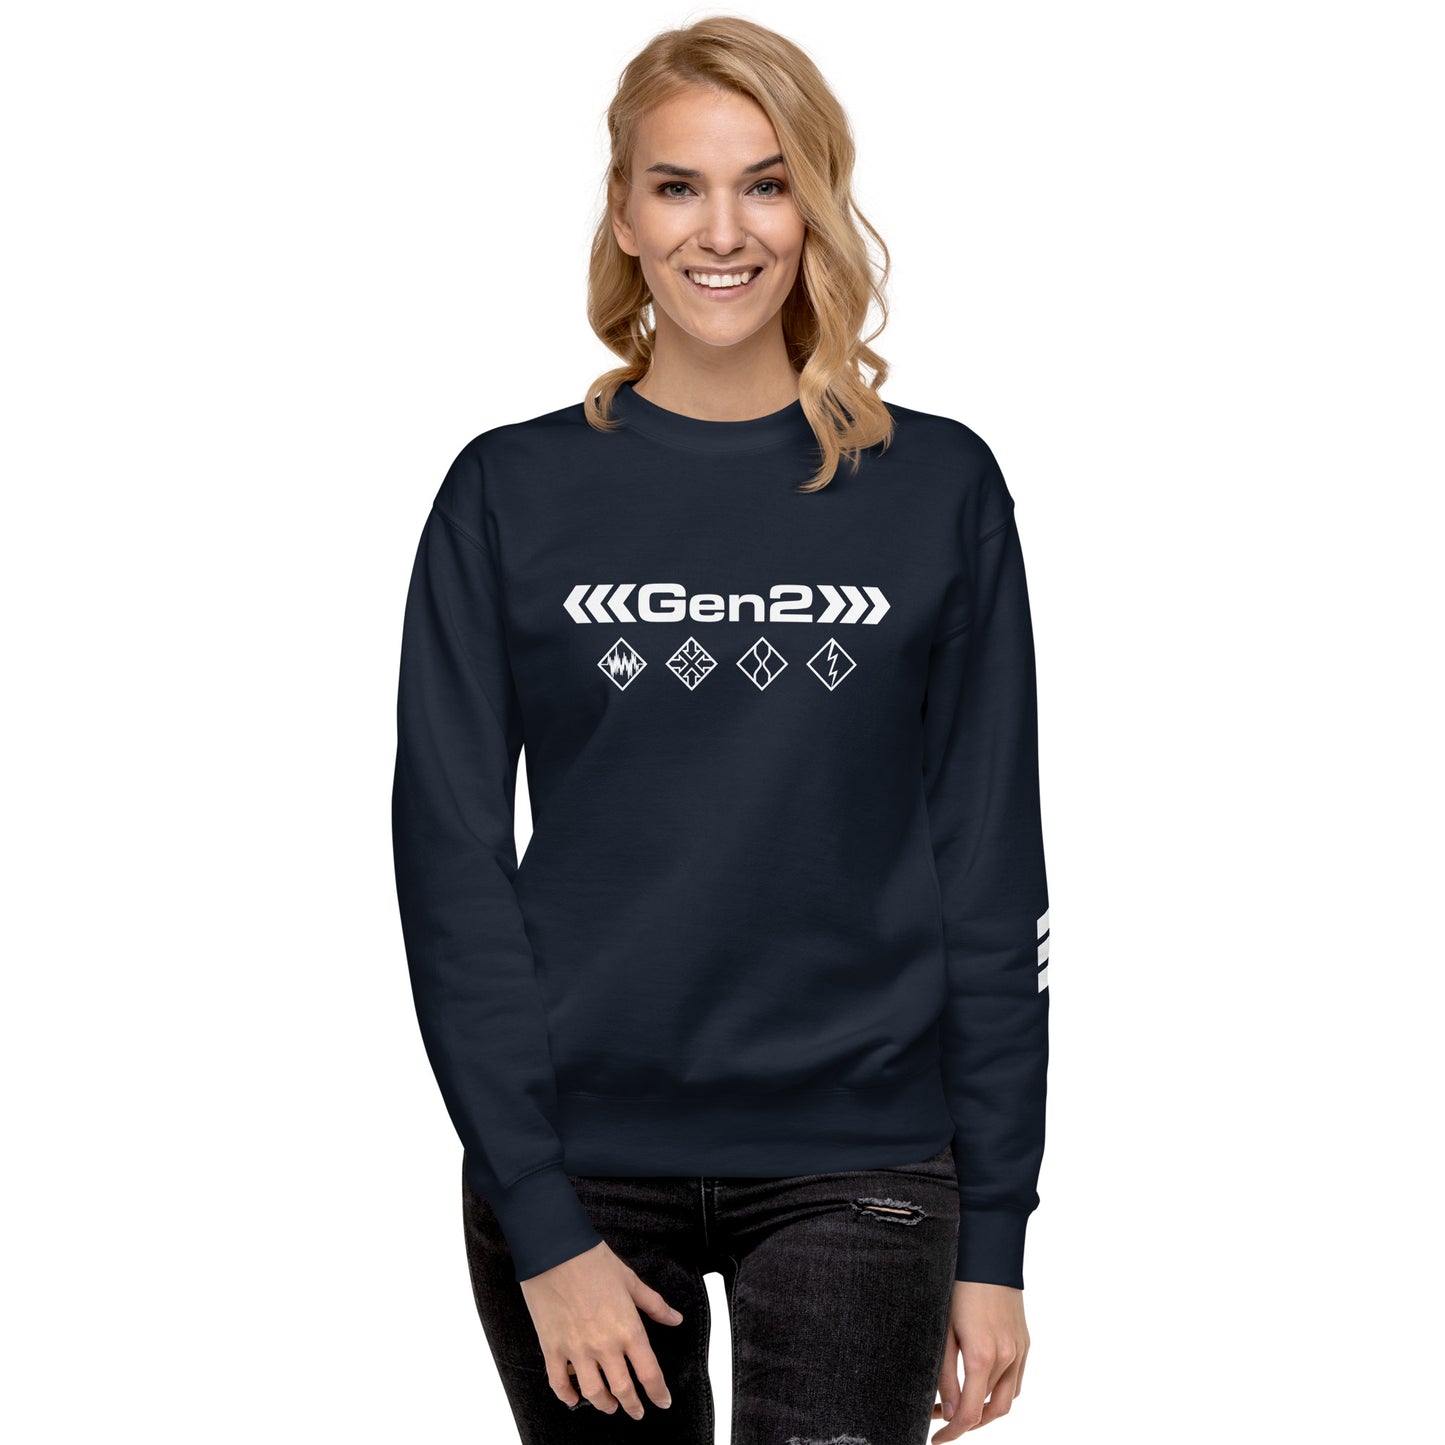 Gen2 "Future History Repeating" Unisex Sweatshirt